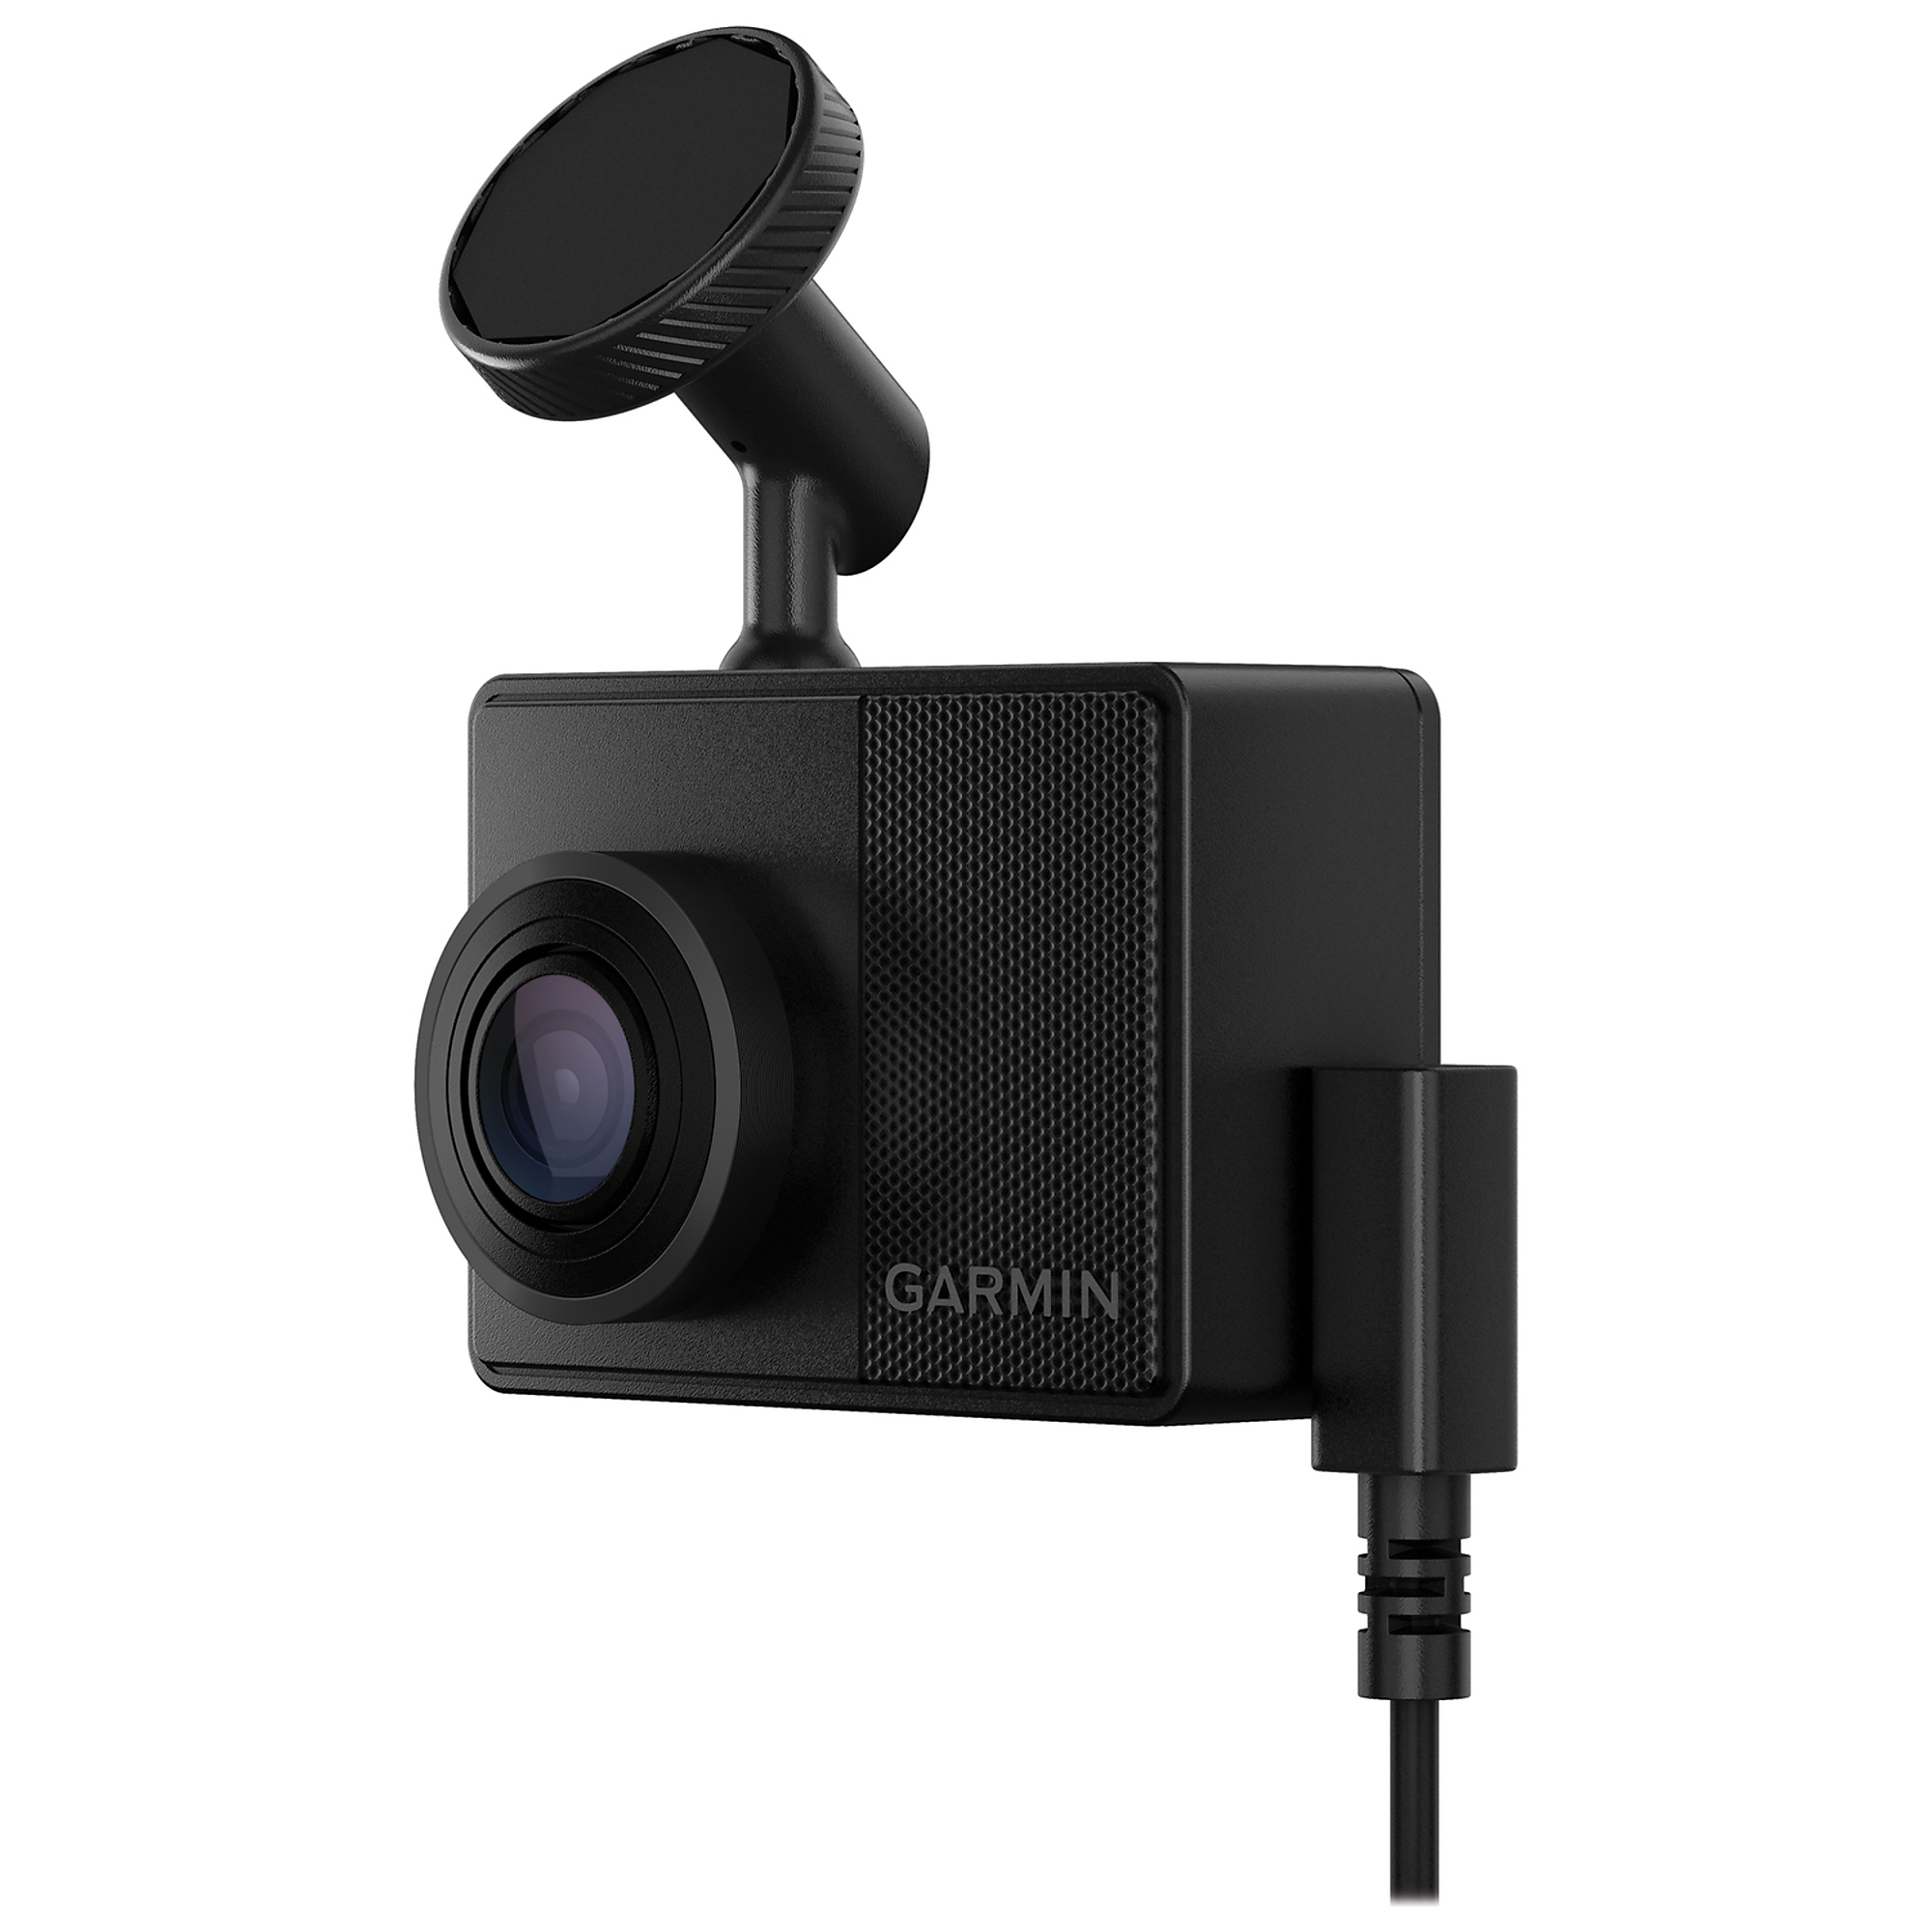 Garmin, 1440p HD Dash Cam 67W with Voice Control, Model 010-02505-05